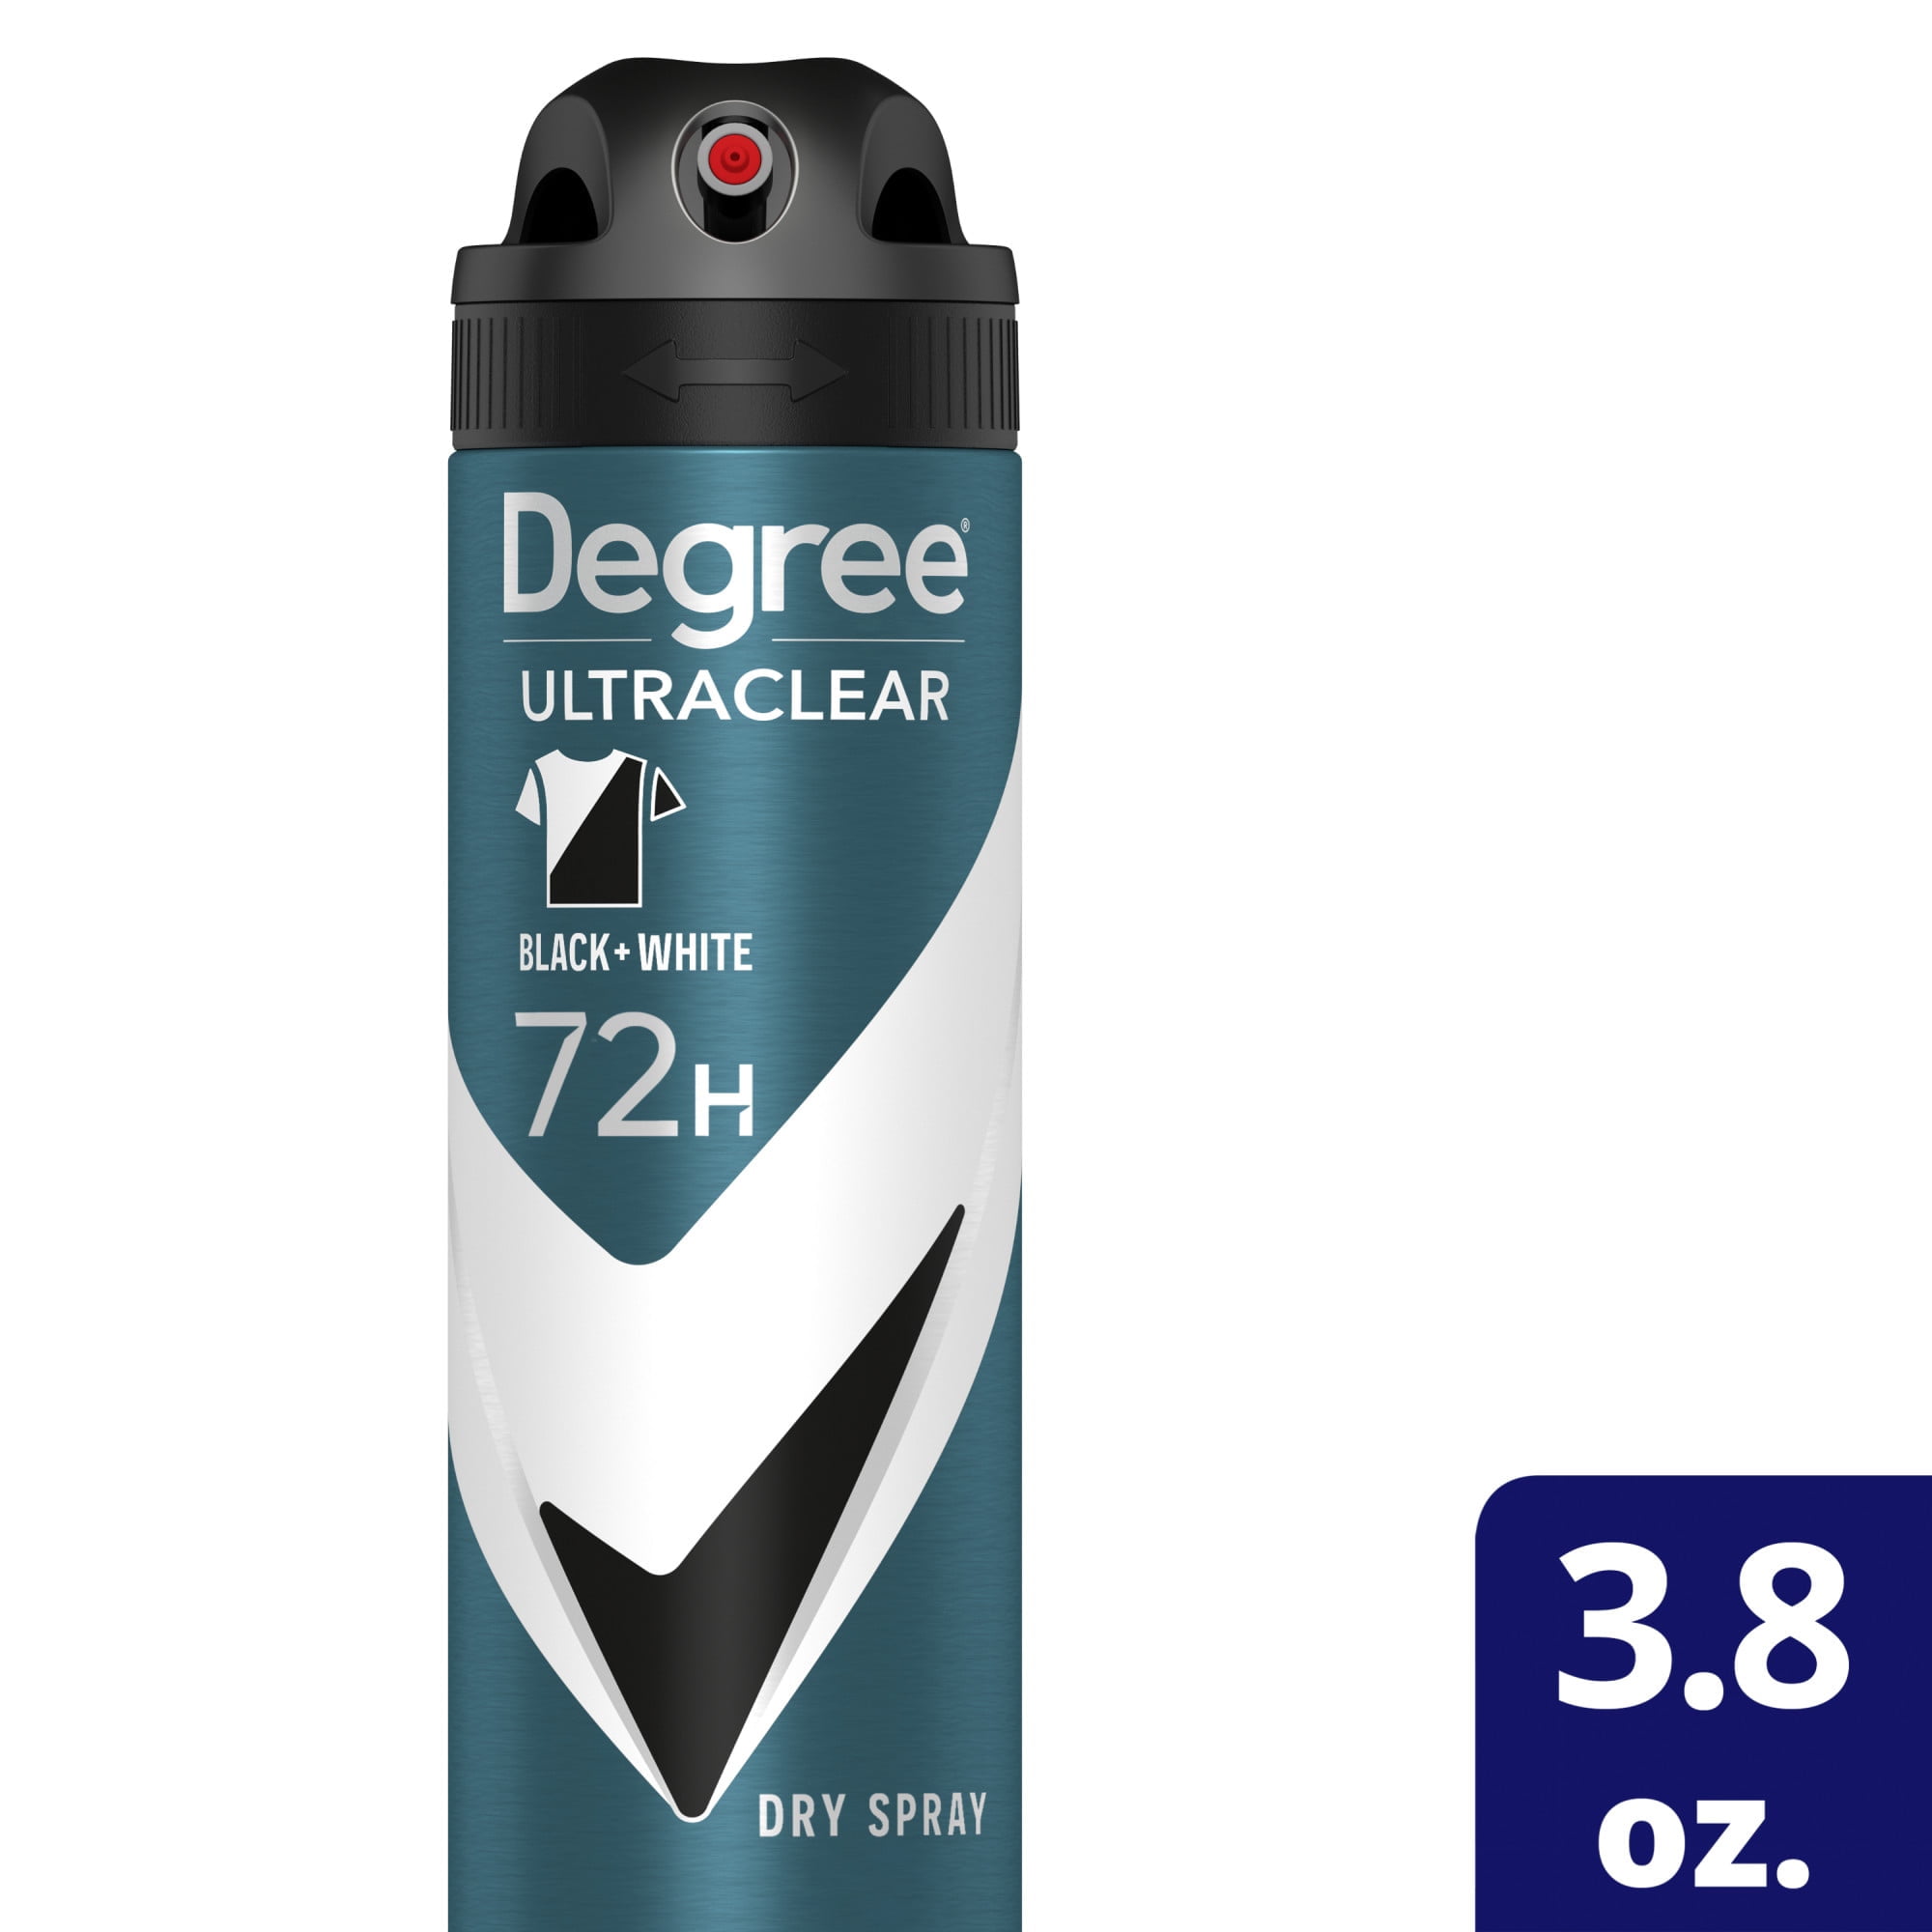 Rexona Men Spray Deodorant Cobalt Dry -150ml